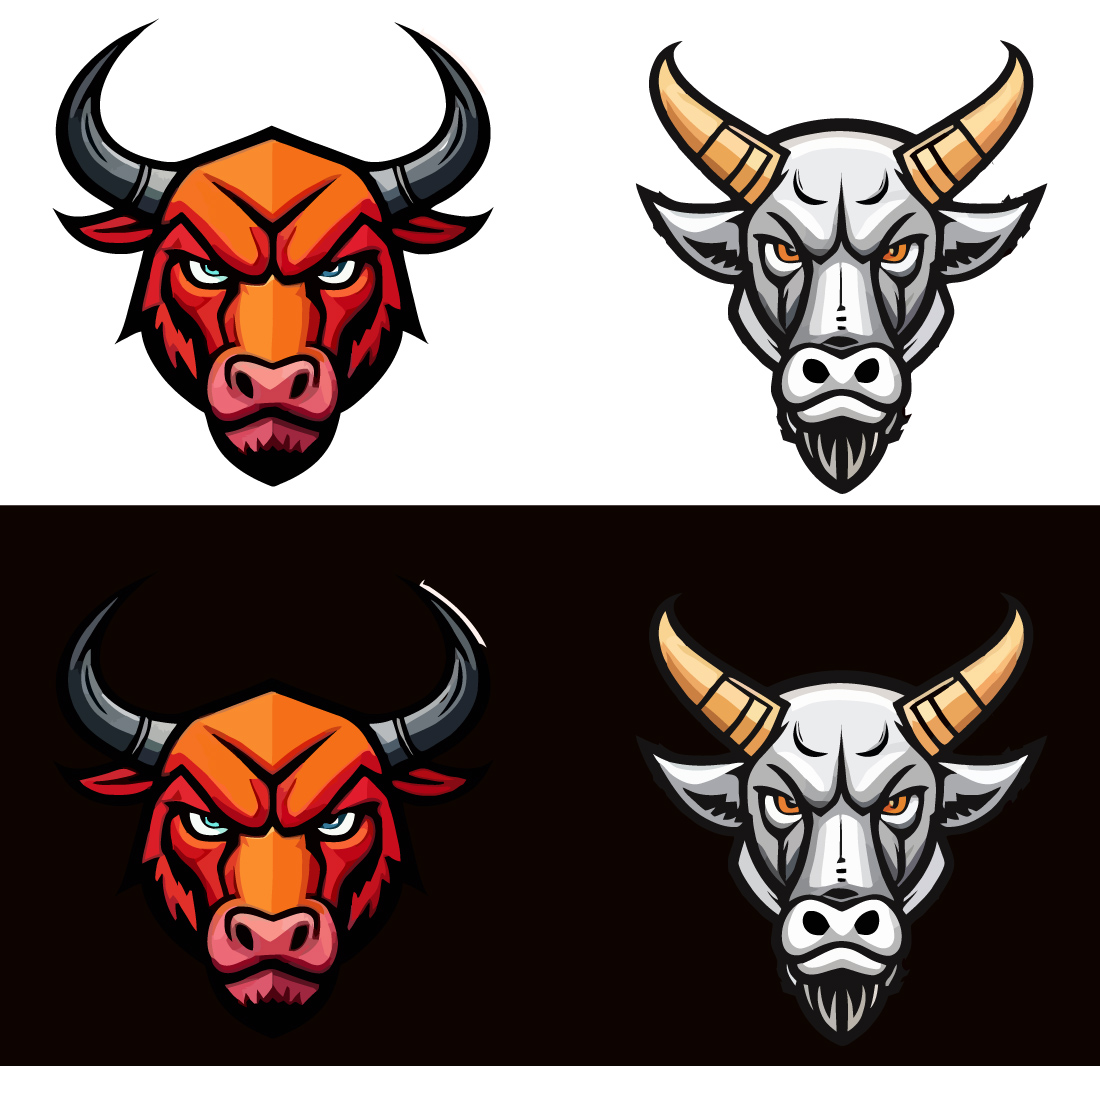 2 bull gaming mascot logos preview image.